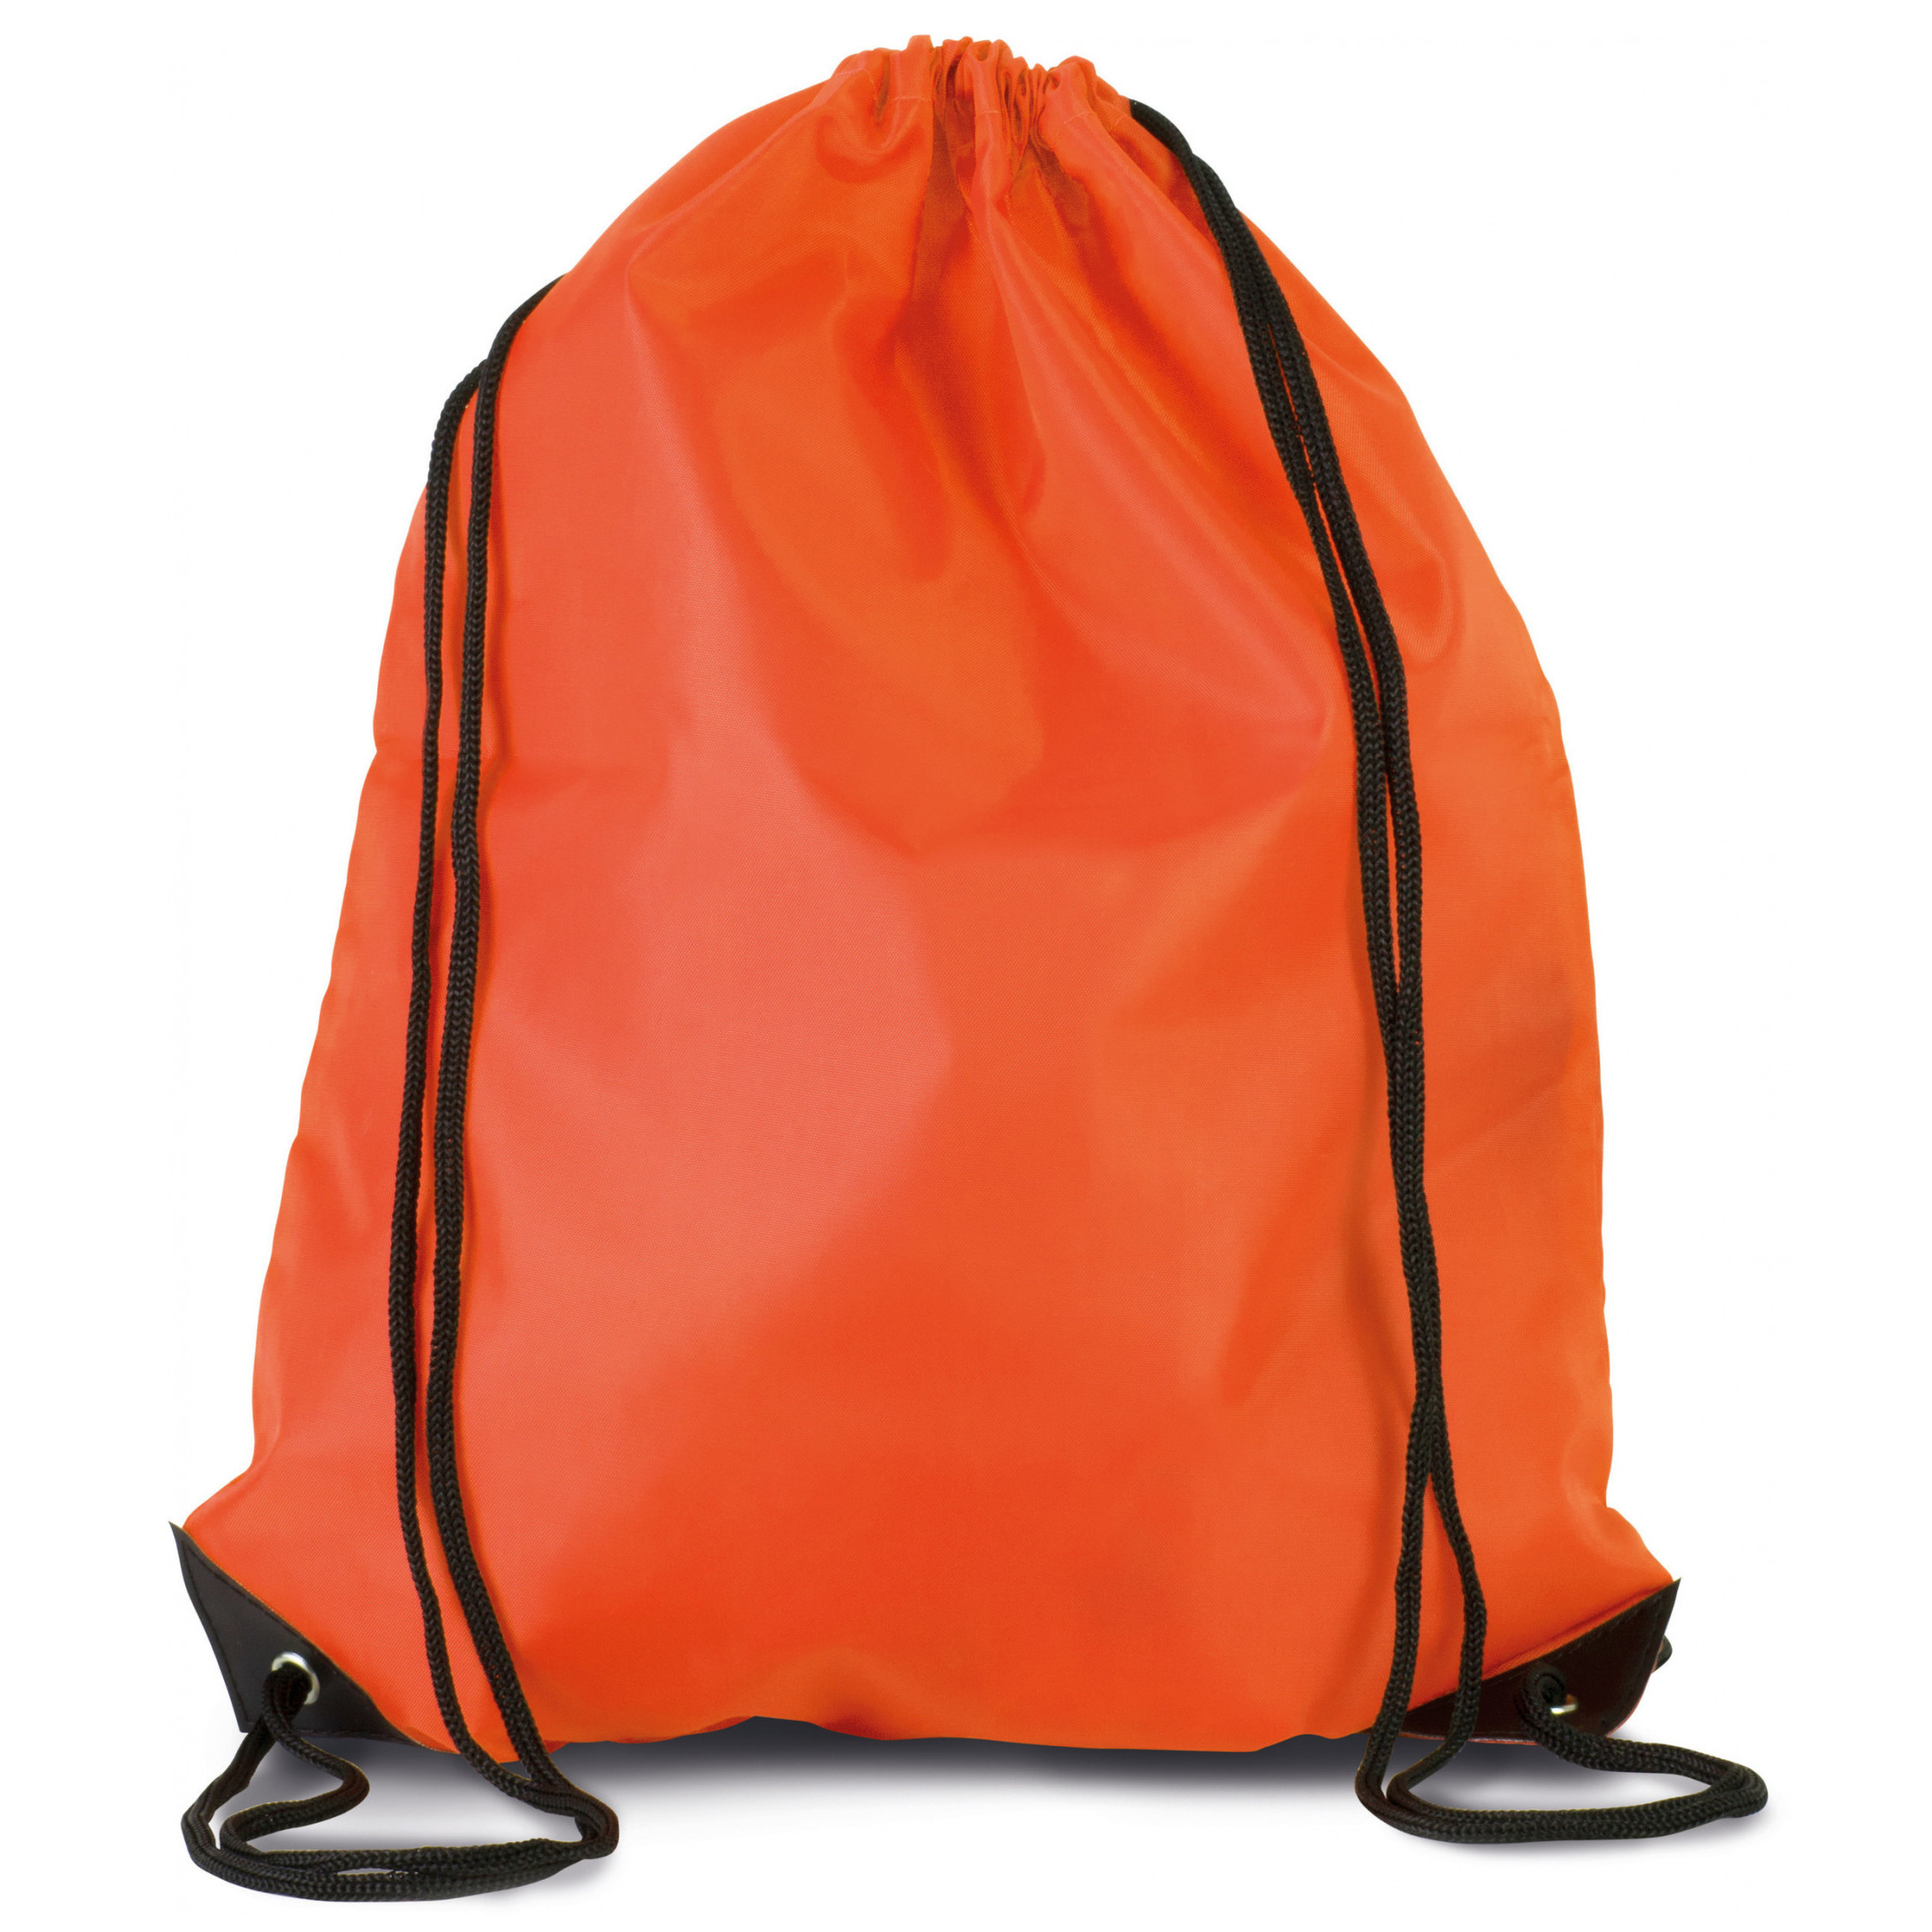 Sport gymtas-draagtas oranje met rijgkoord 34 x 44 cm van polyester